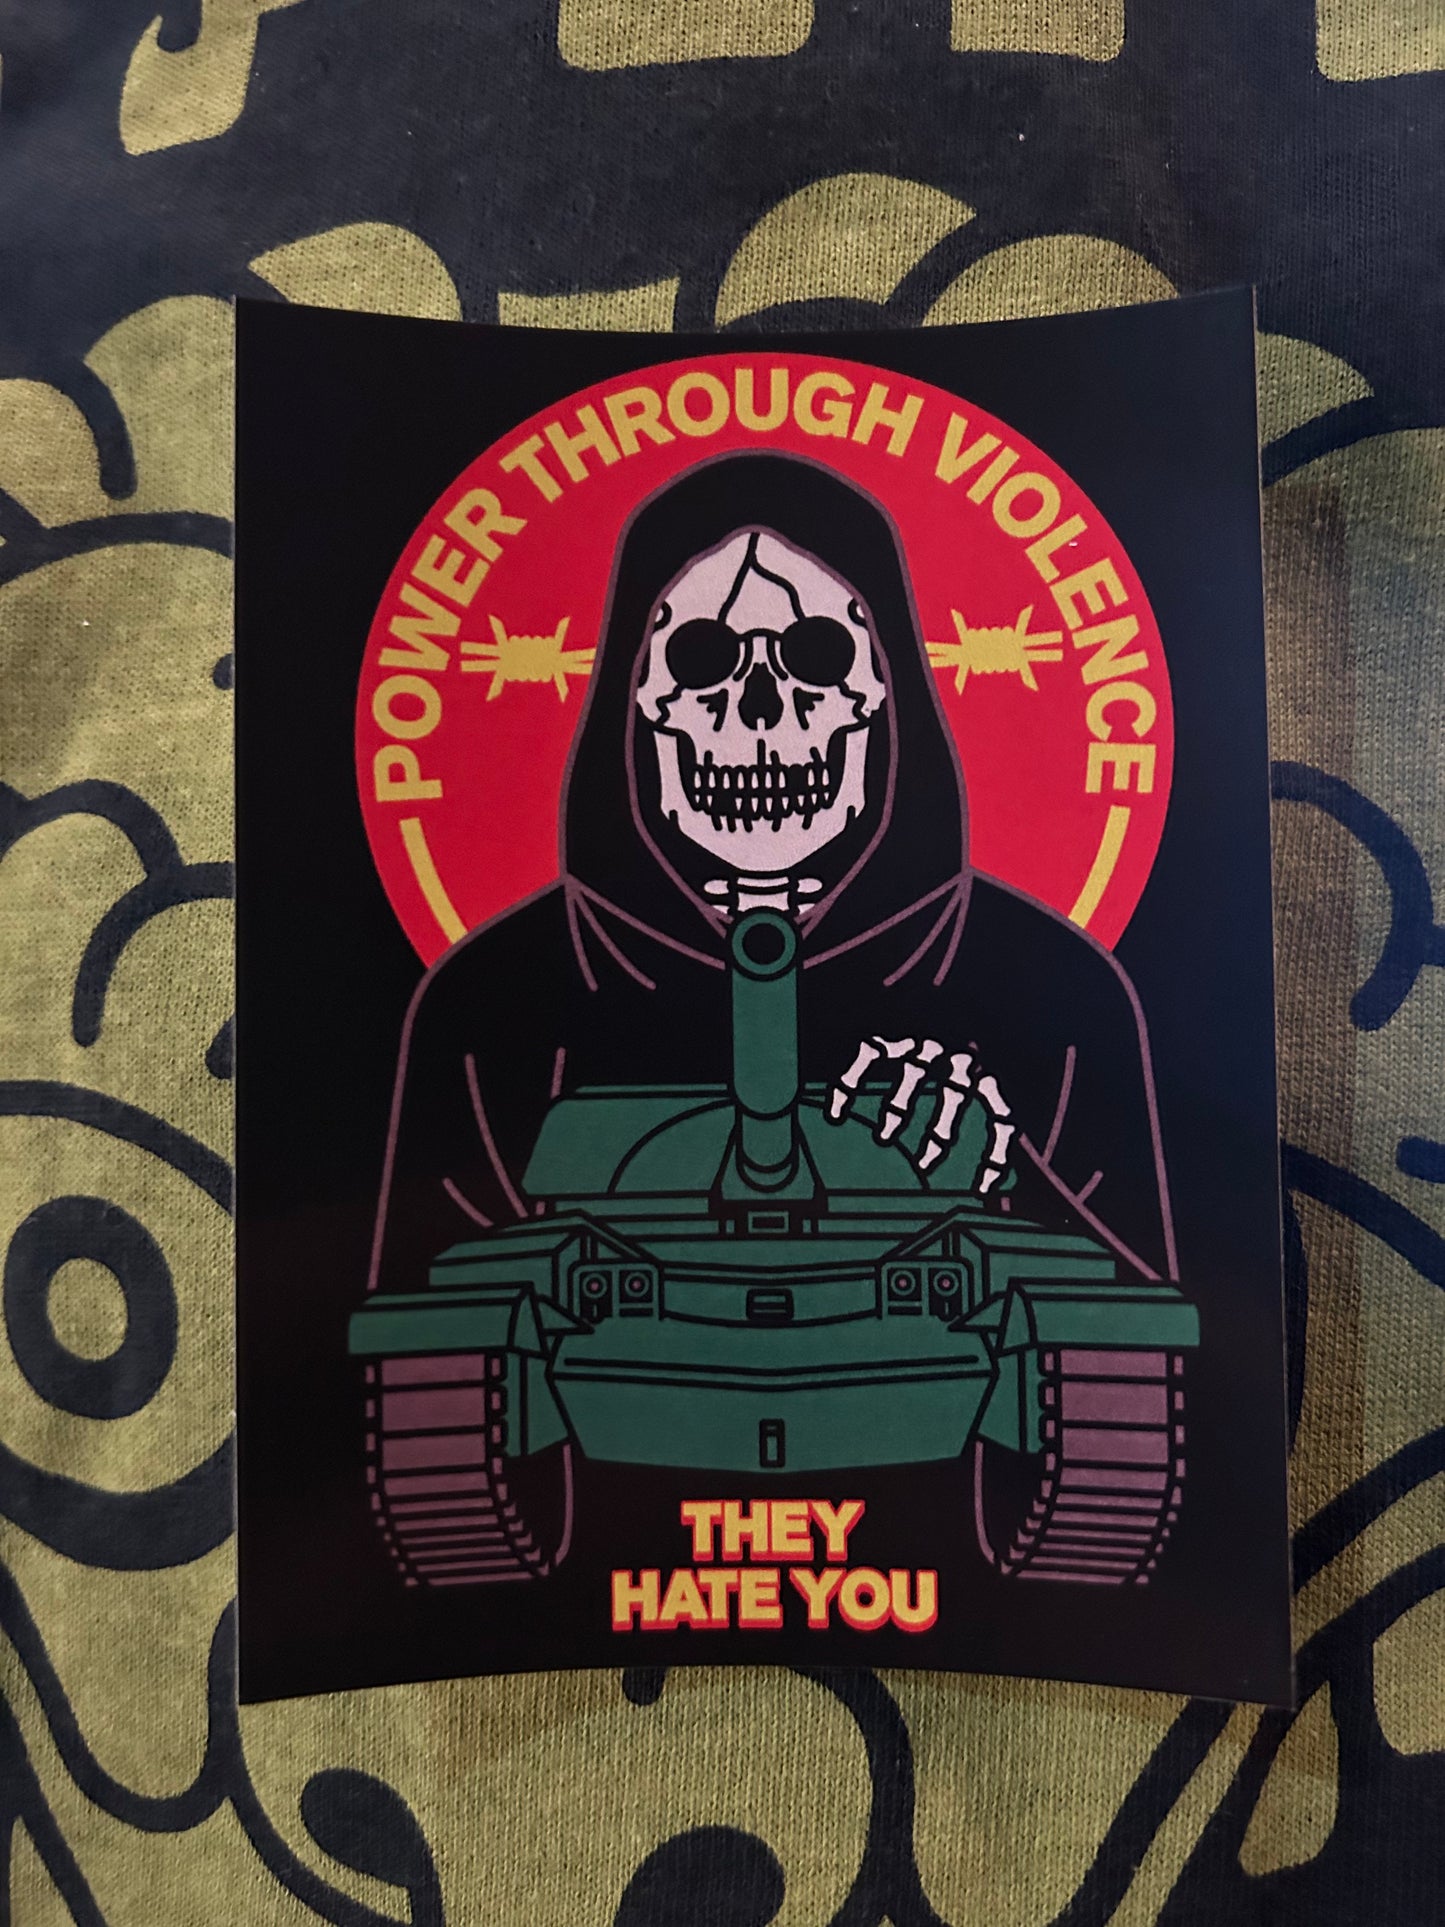 "Power Through Violence" Sticker by Death/Traitors